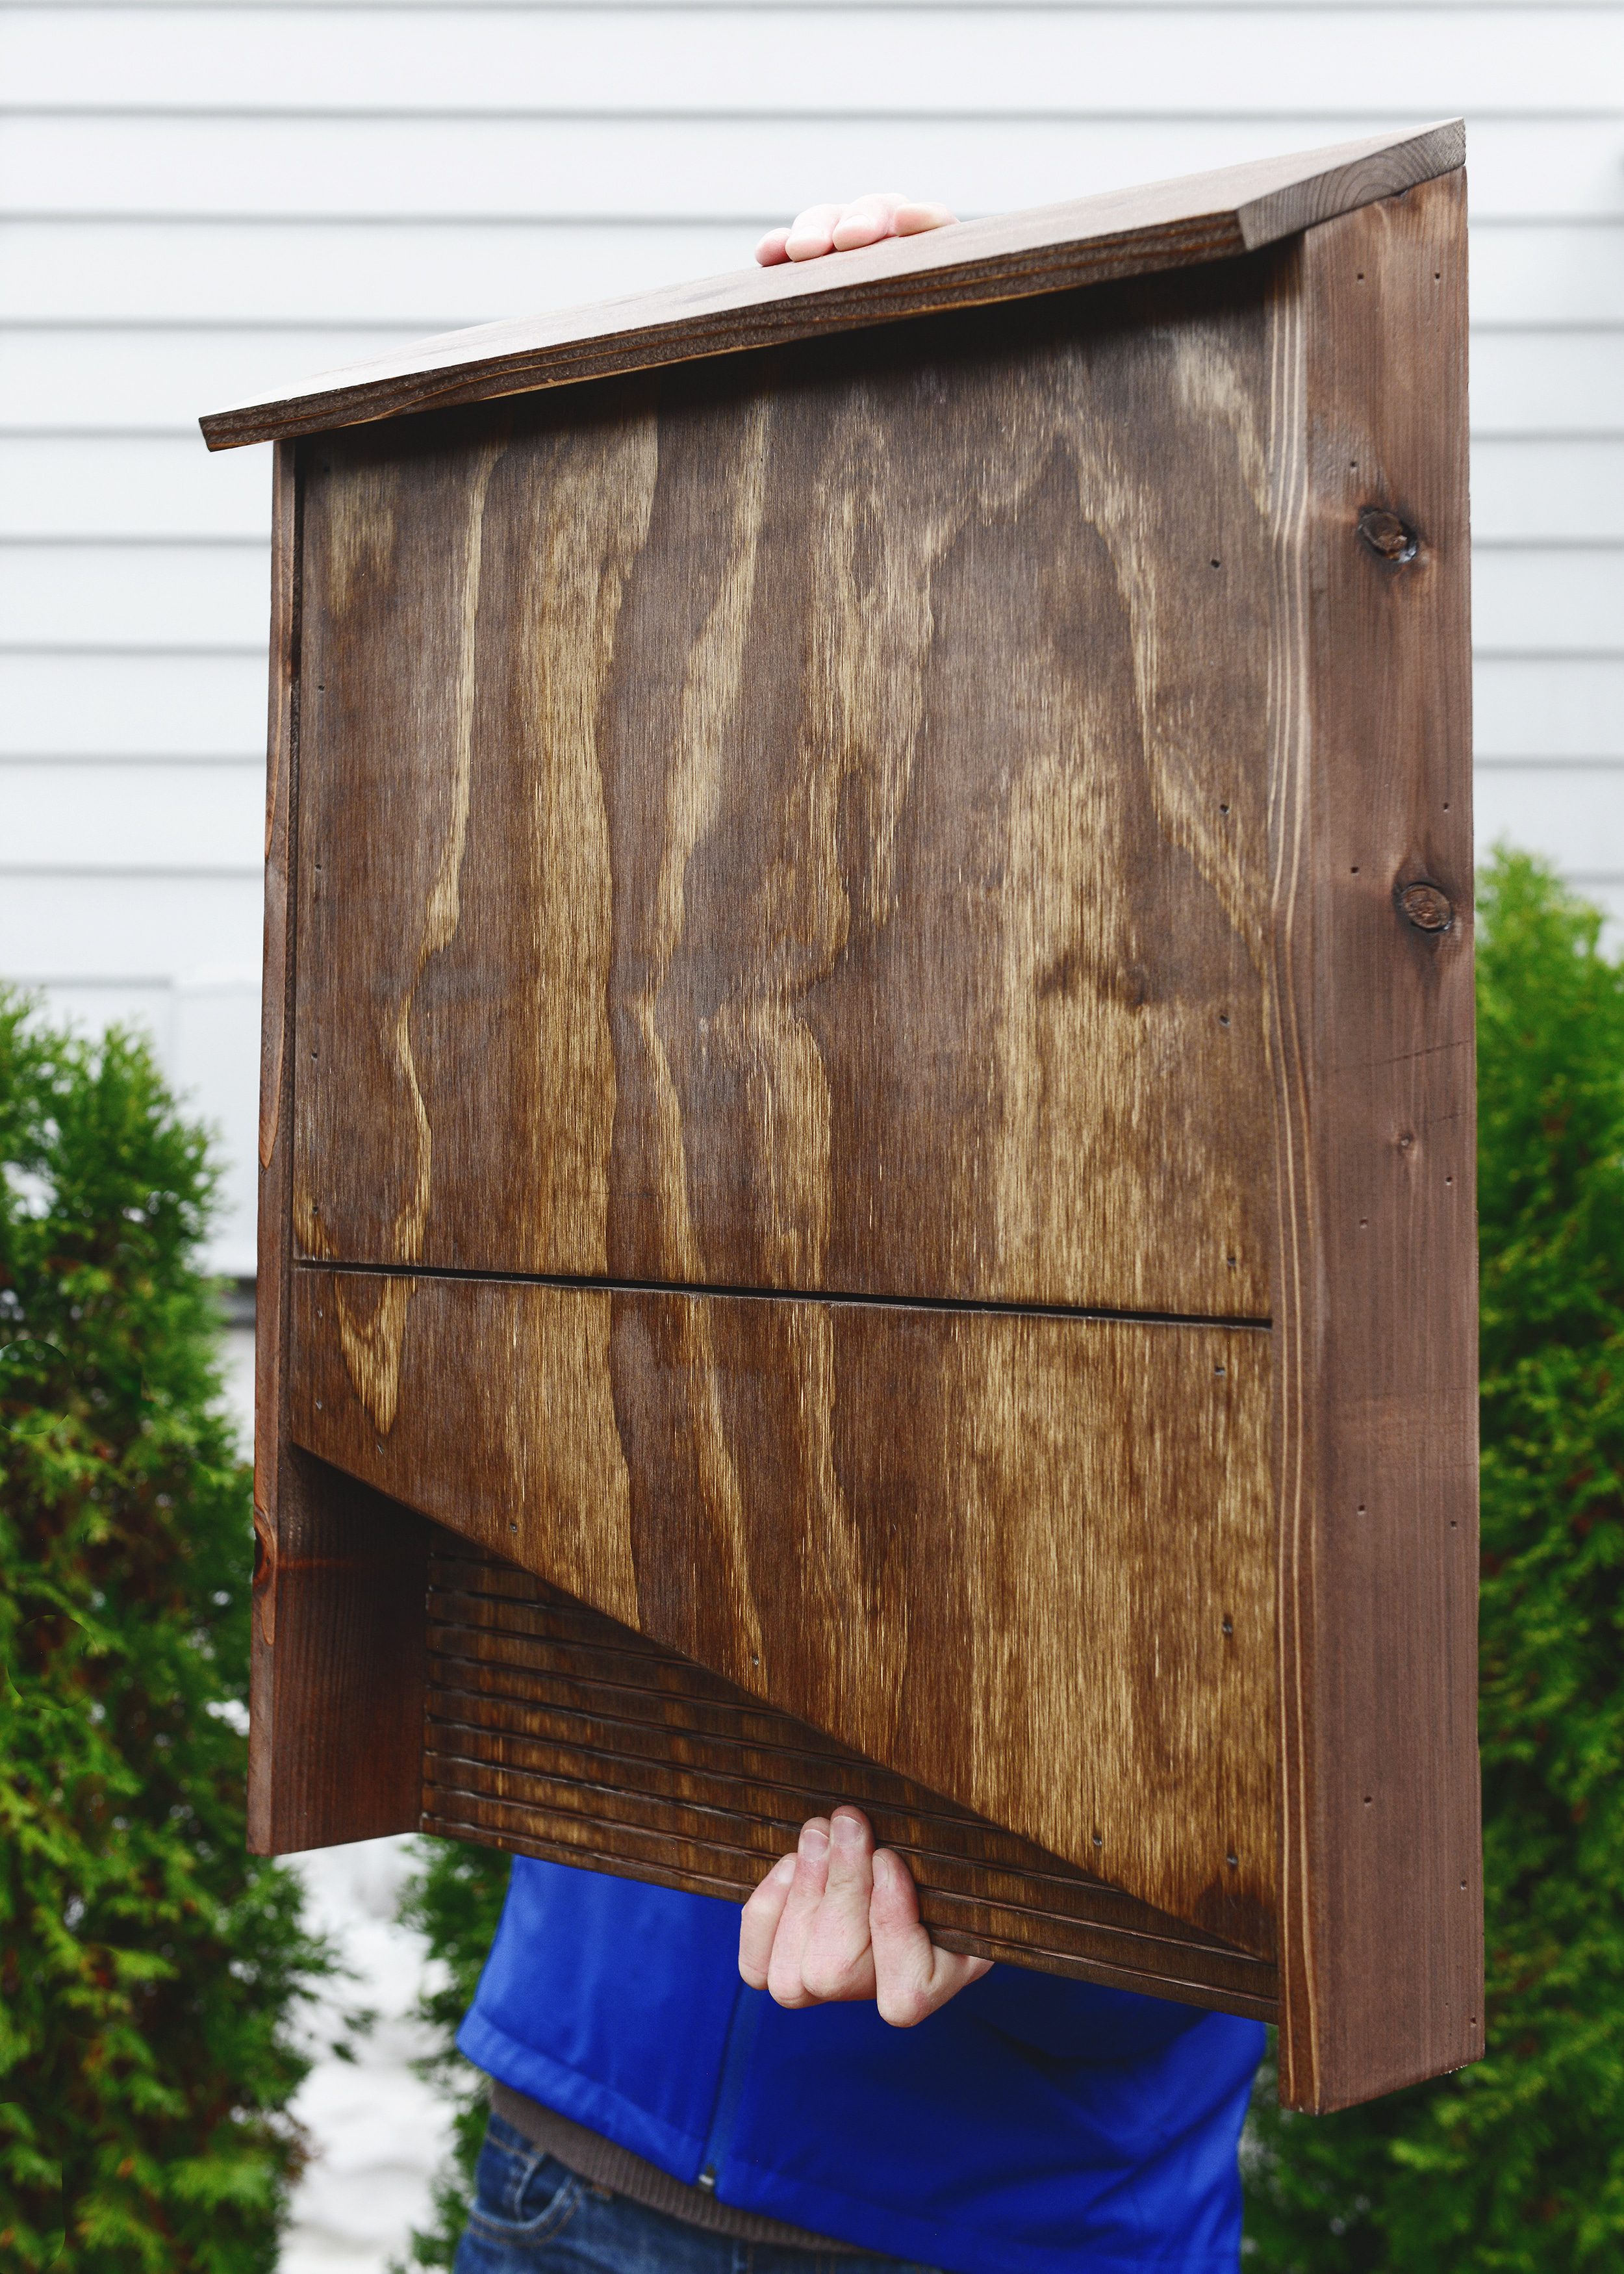 A completed DIY bat box is held up in an urban backyard // How-to build a bat box, DIY bat box via Yellow Brick Home